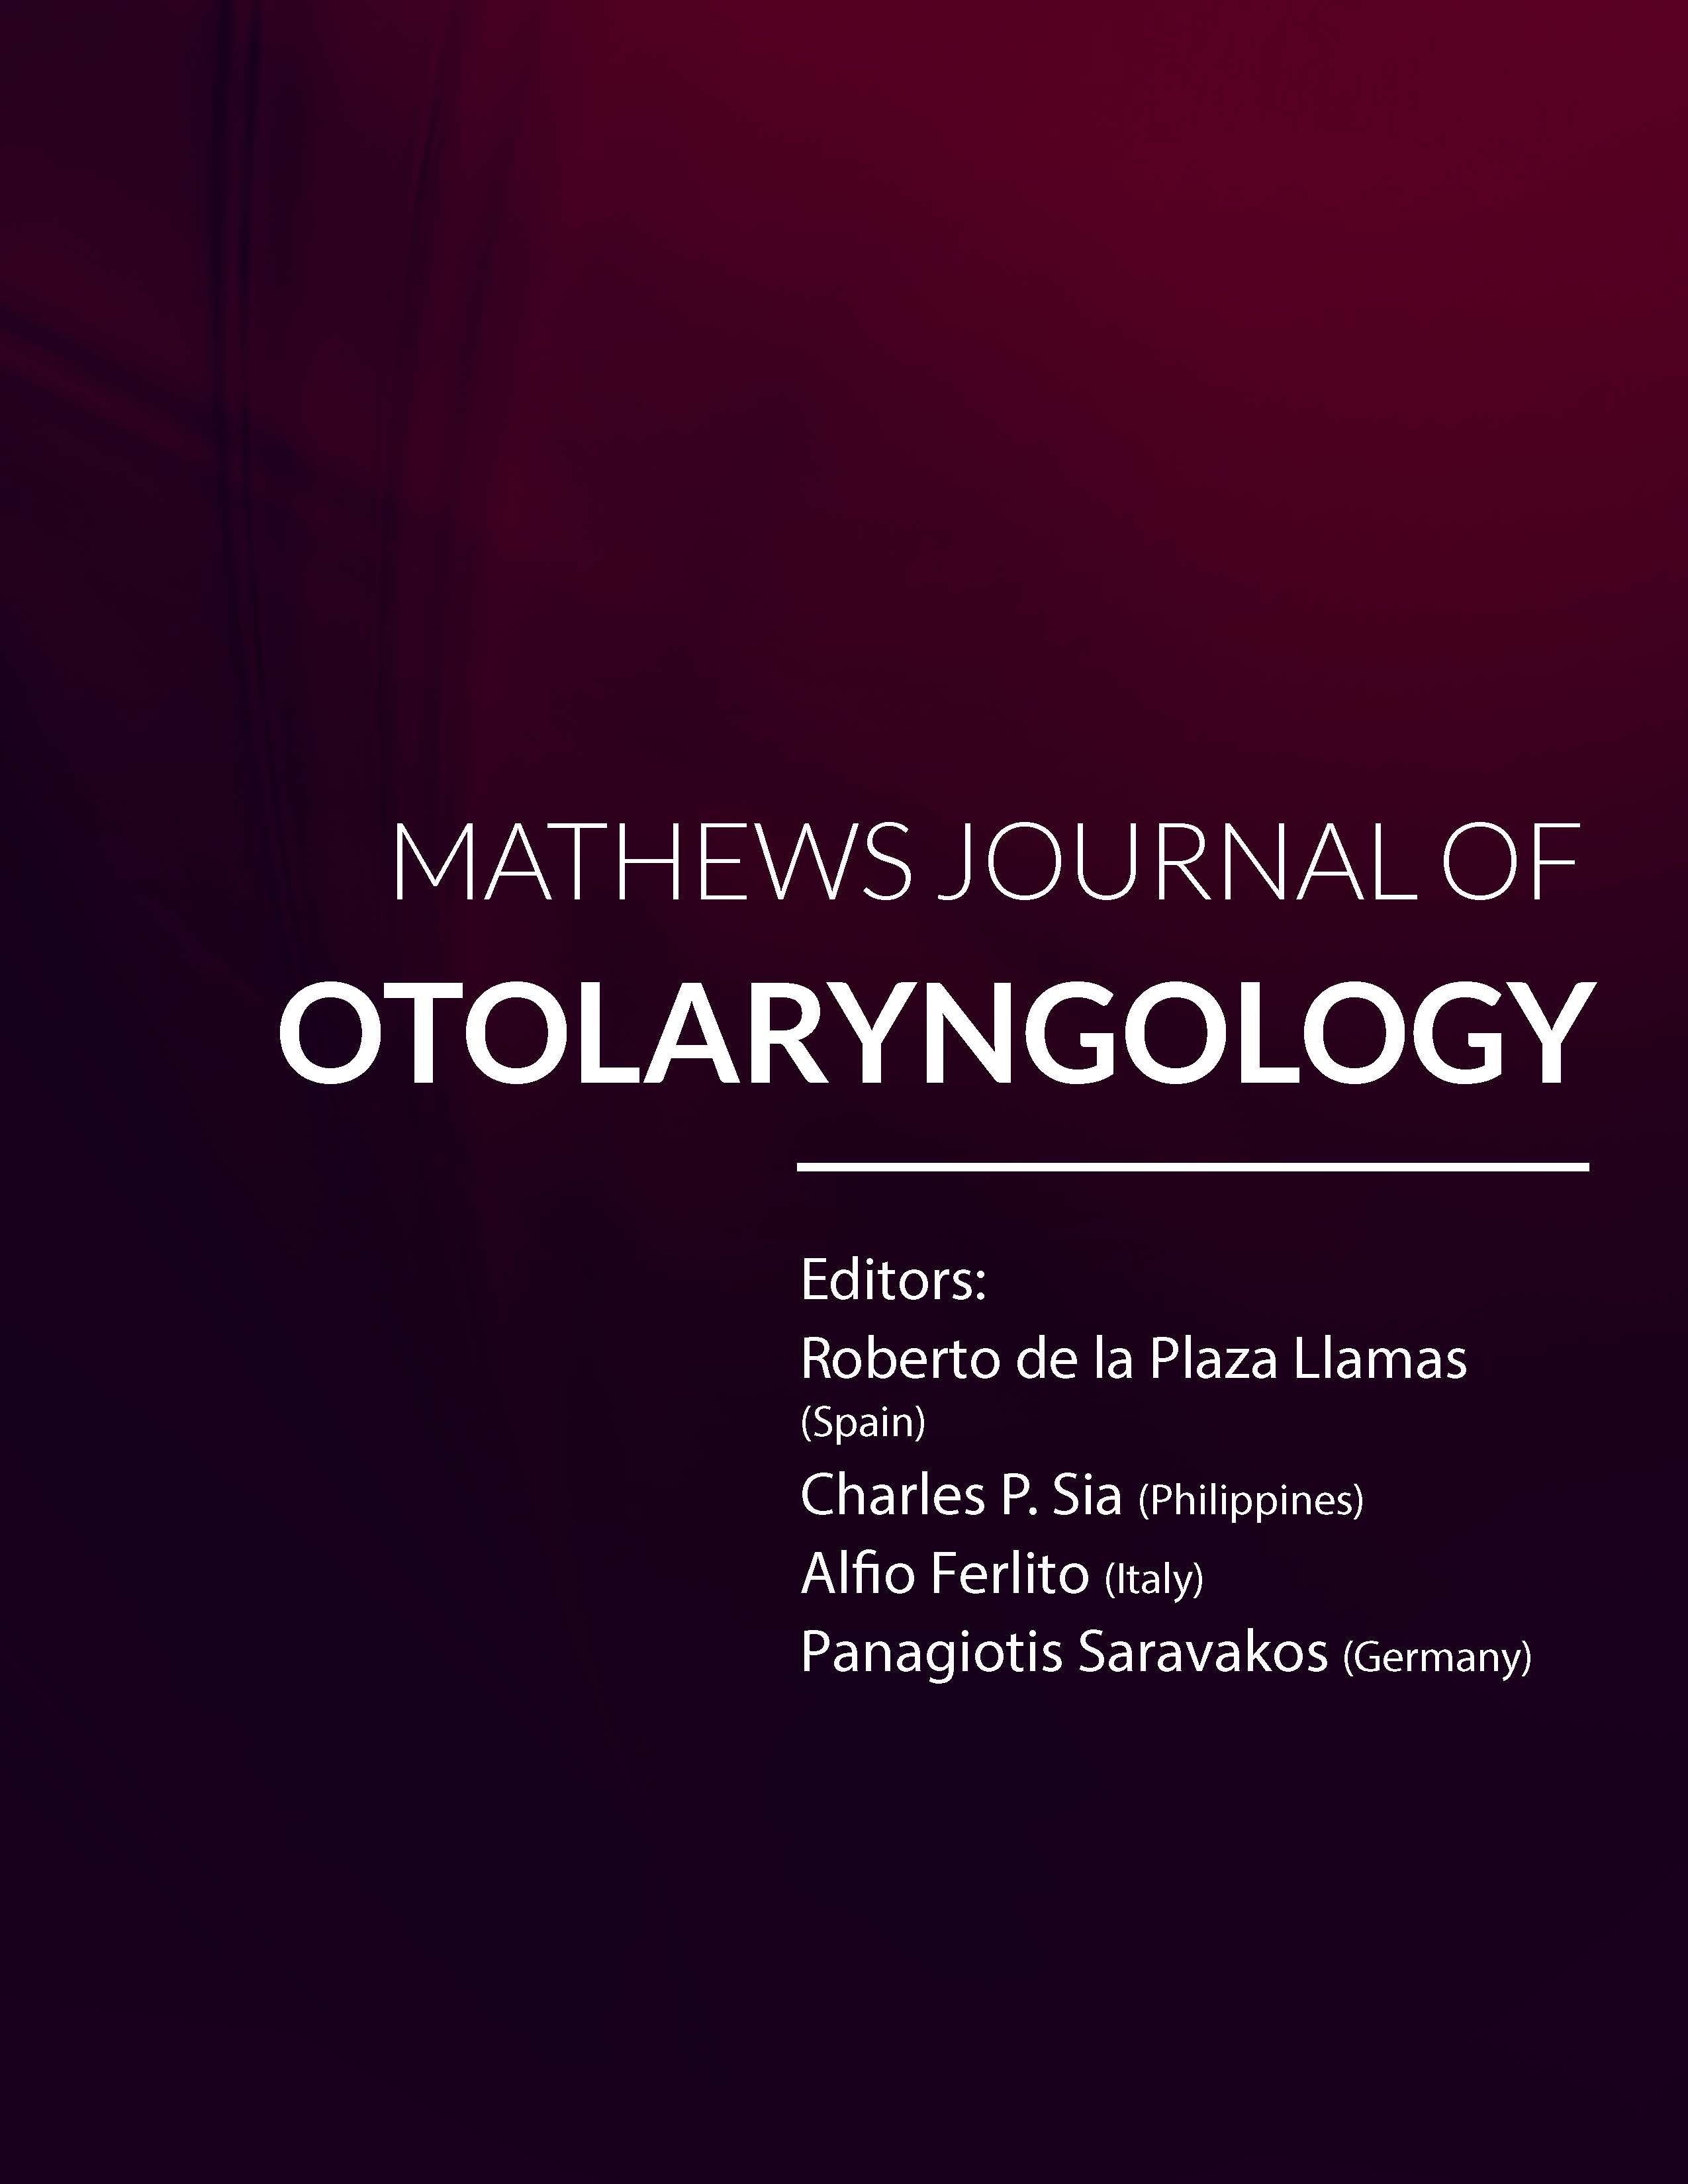 Mathews Journal of Otolaryngology